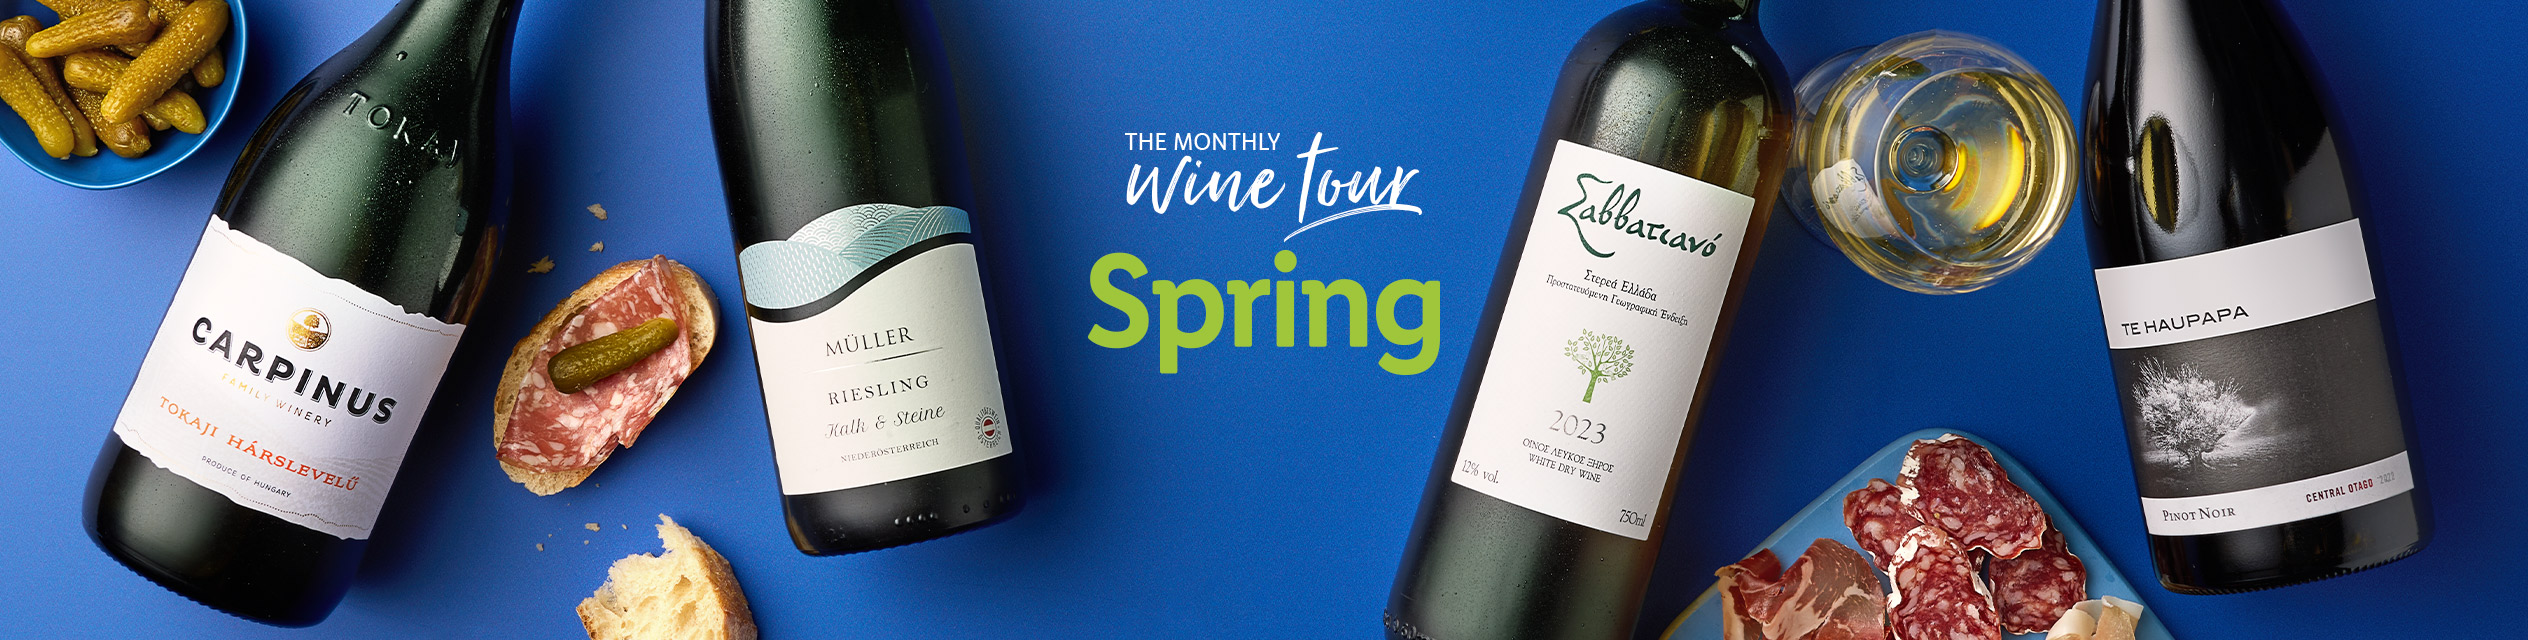 Spring Wine Tour 